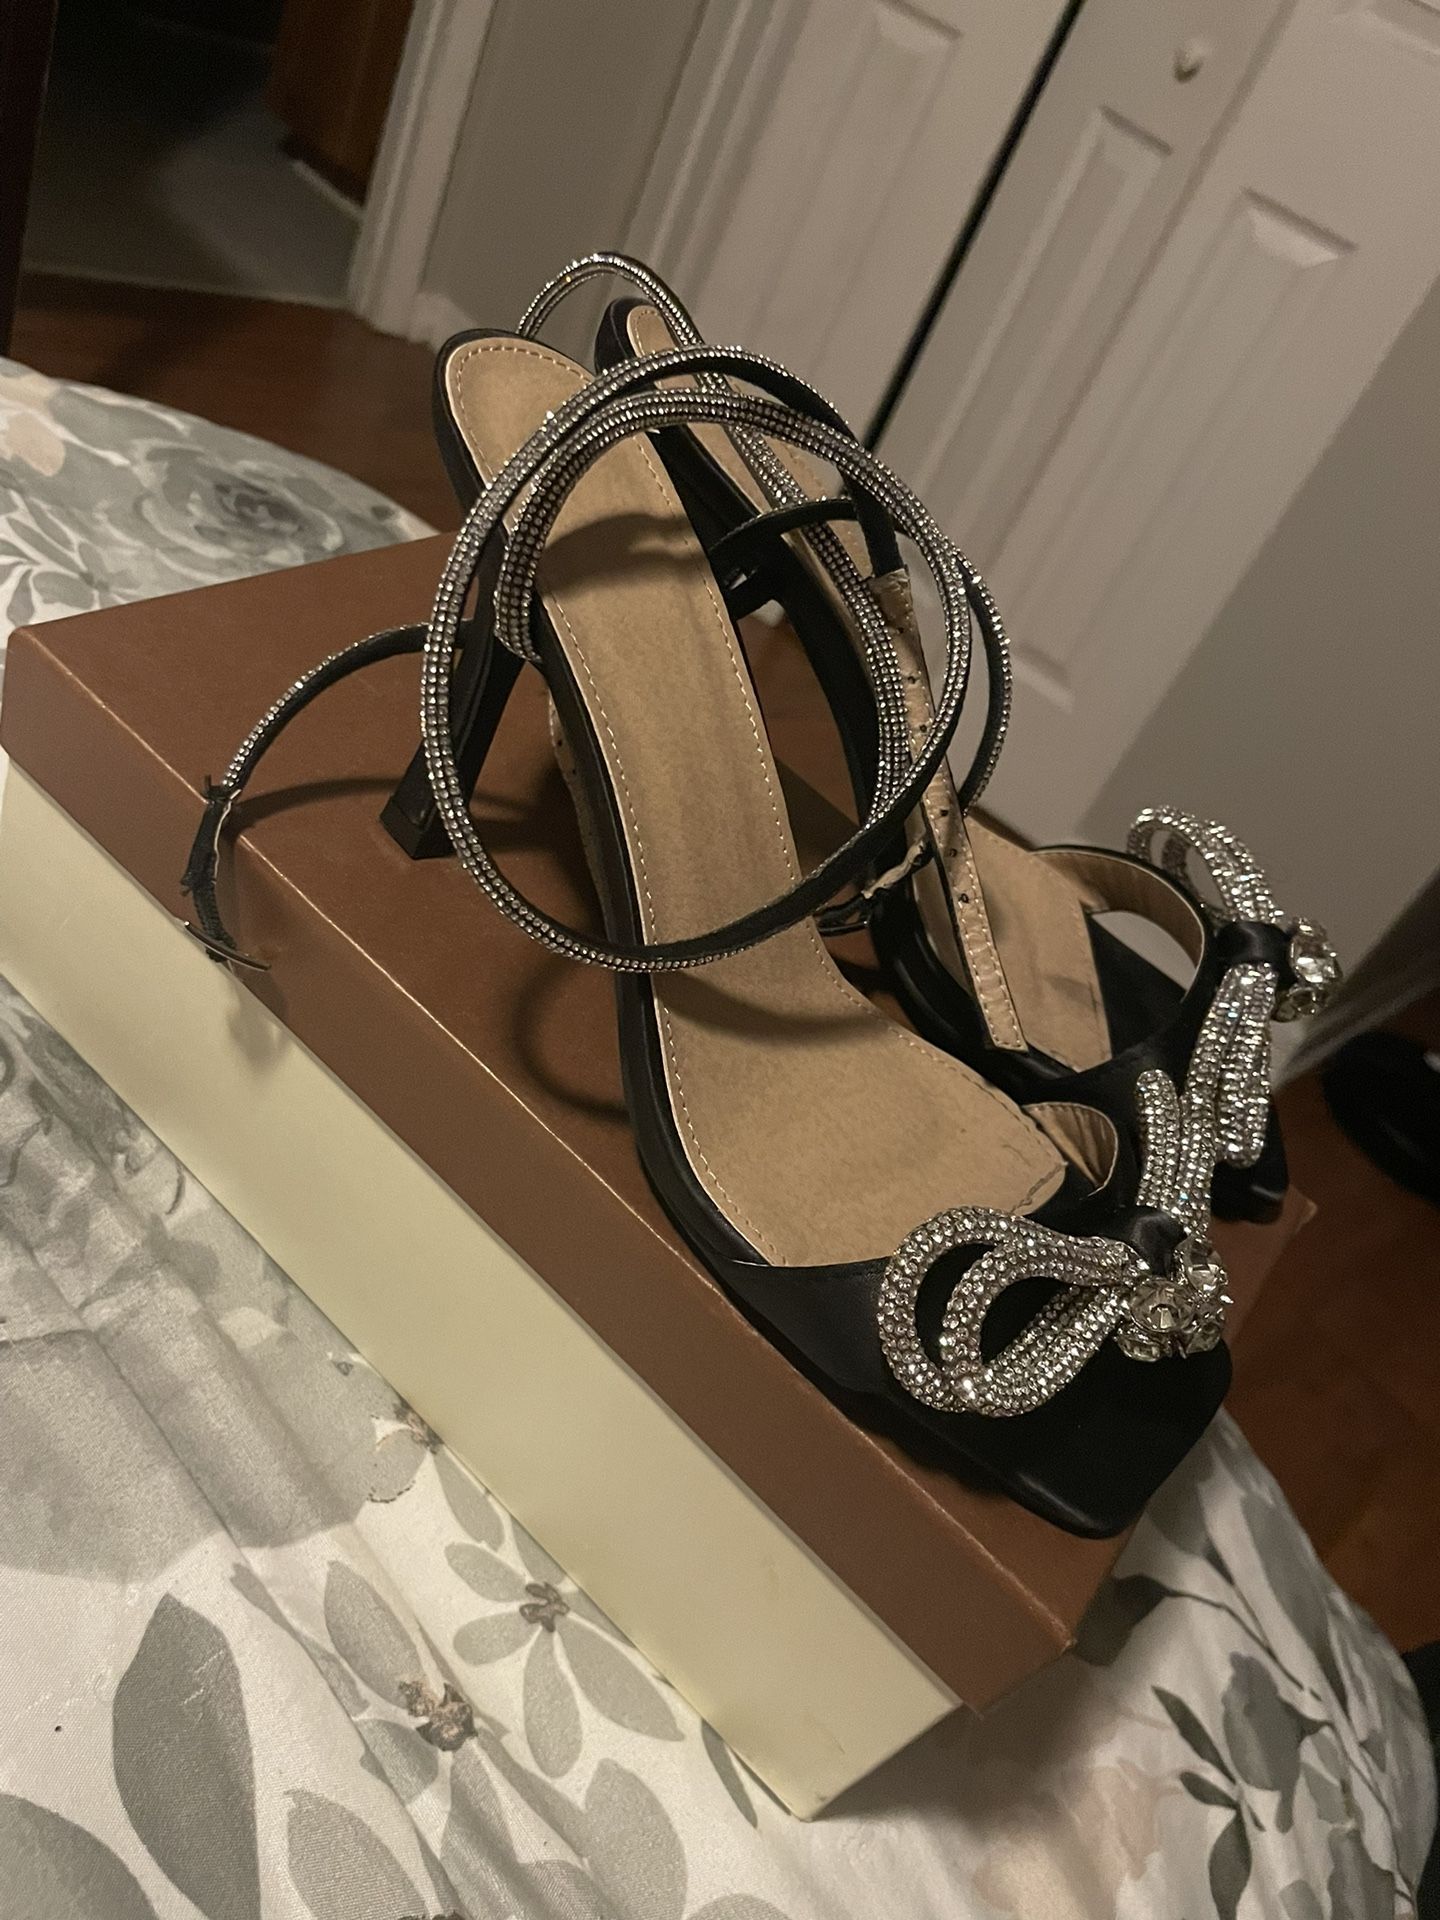 Size 7 homecoming heels